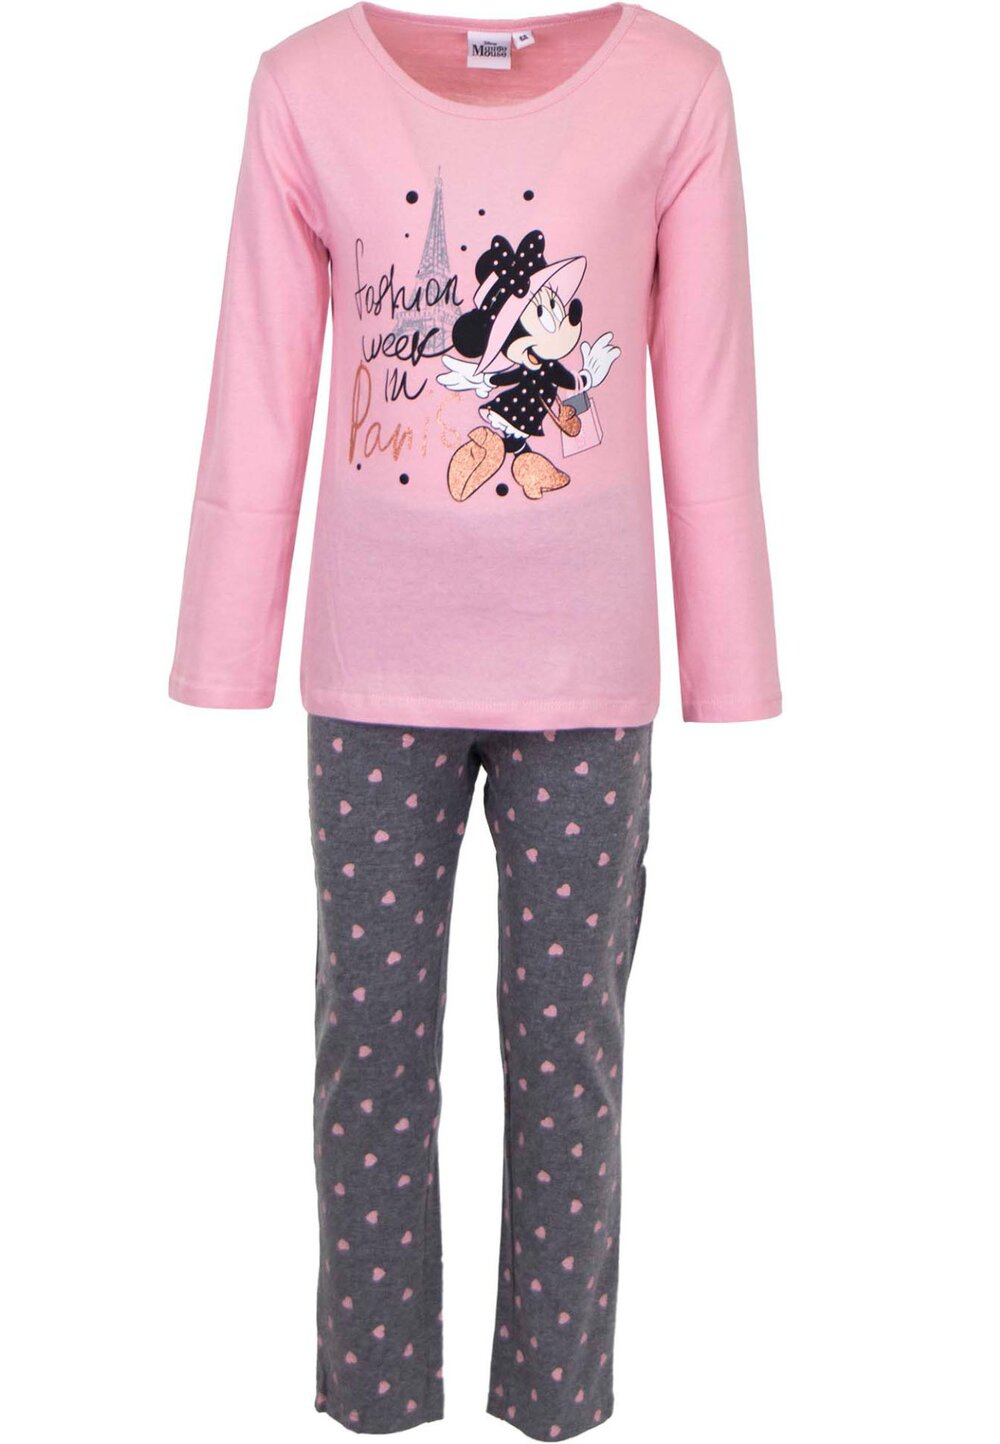 Pijama maneca lunga, bumbac, cu imprimeu, Minnie, Paris, roz DISNEY